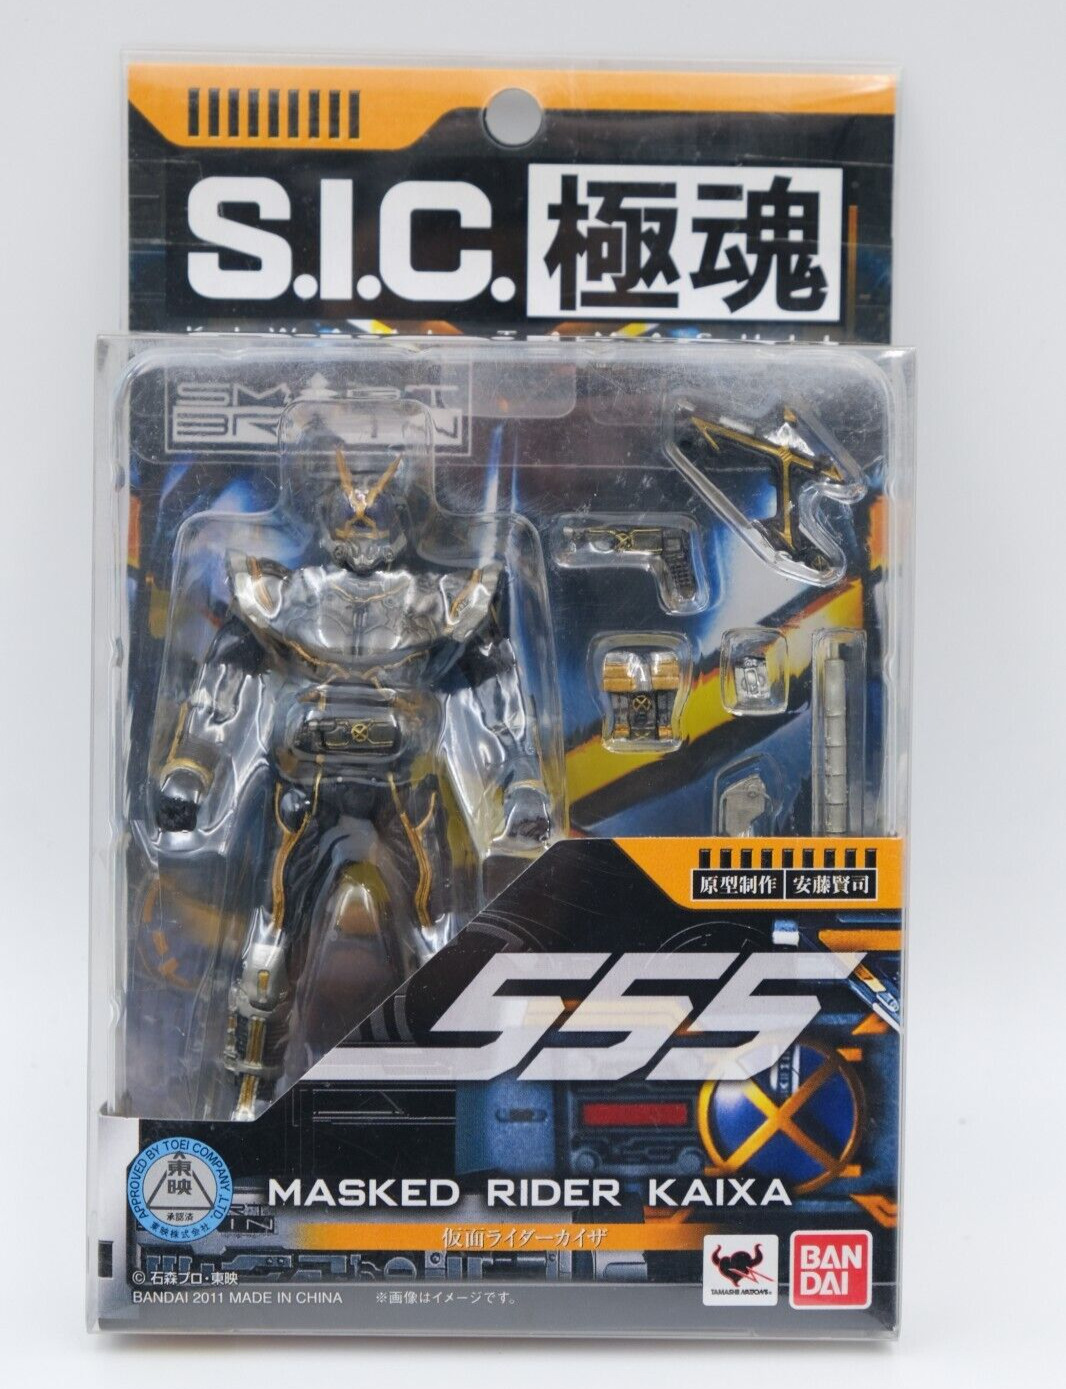 Bandai S.I.C. Kiwami Tamashii Masked Rider 555 Kaixa Figure 2011 US Seller